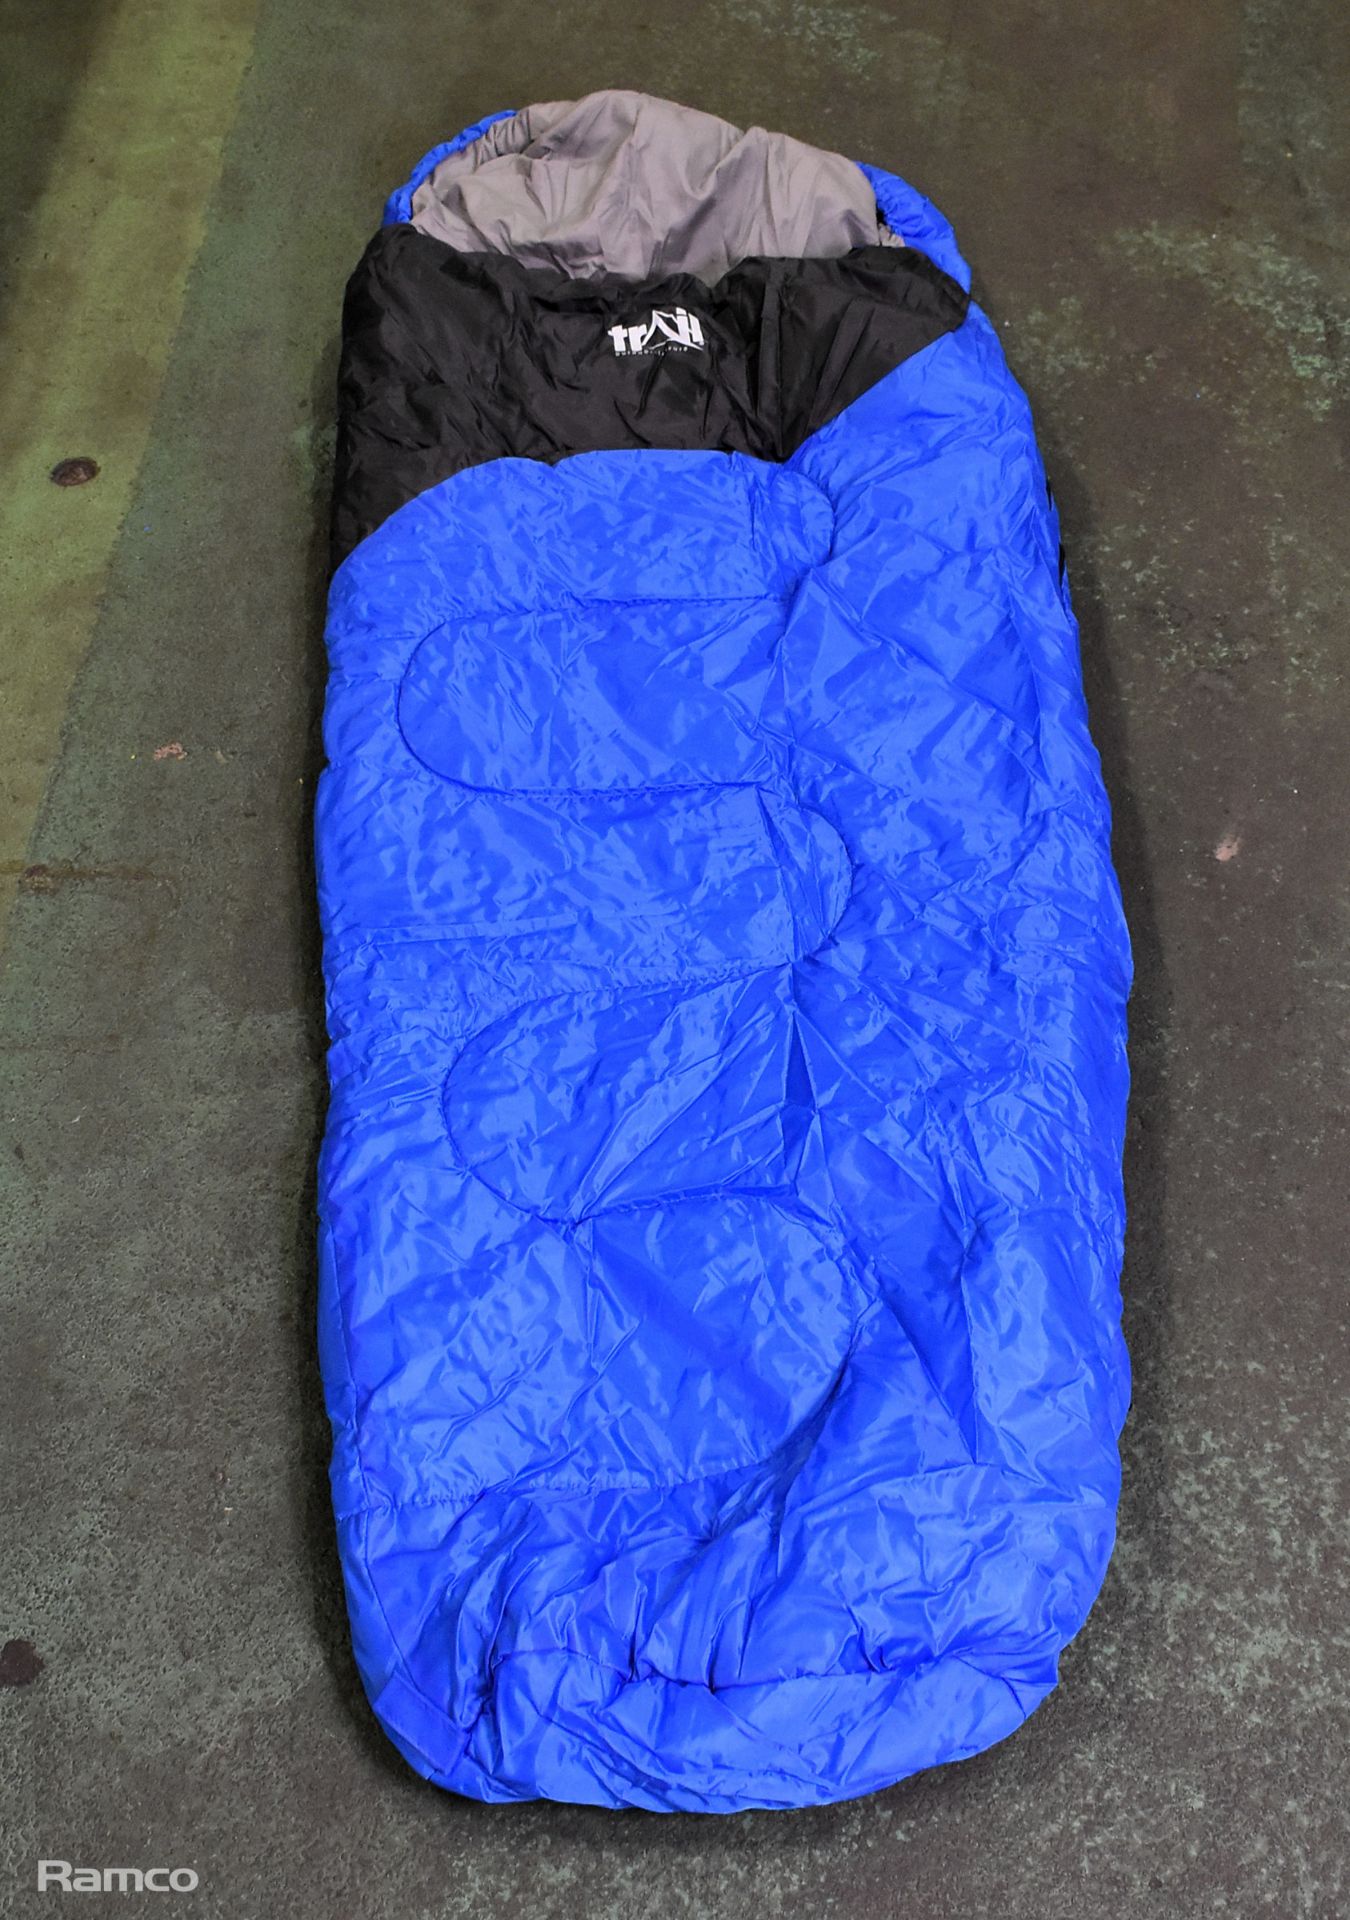 Overnight adventure outdoor sleeping bag in a rucksack - Image 3 of 6